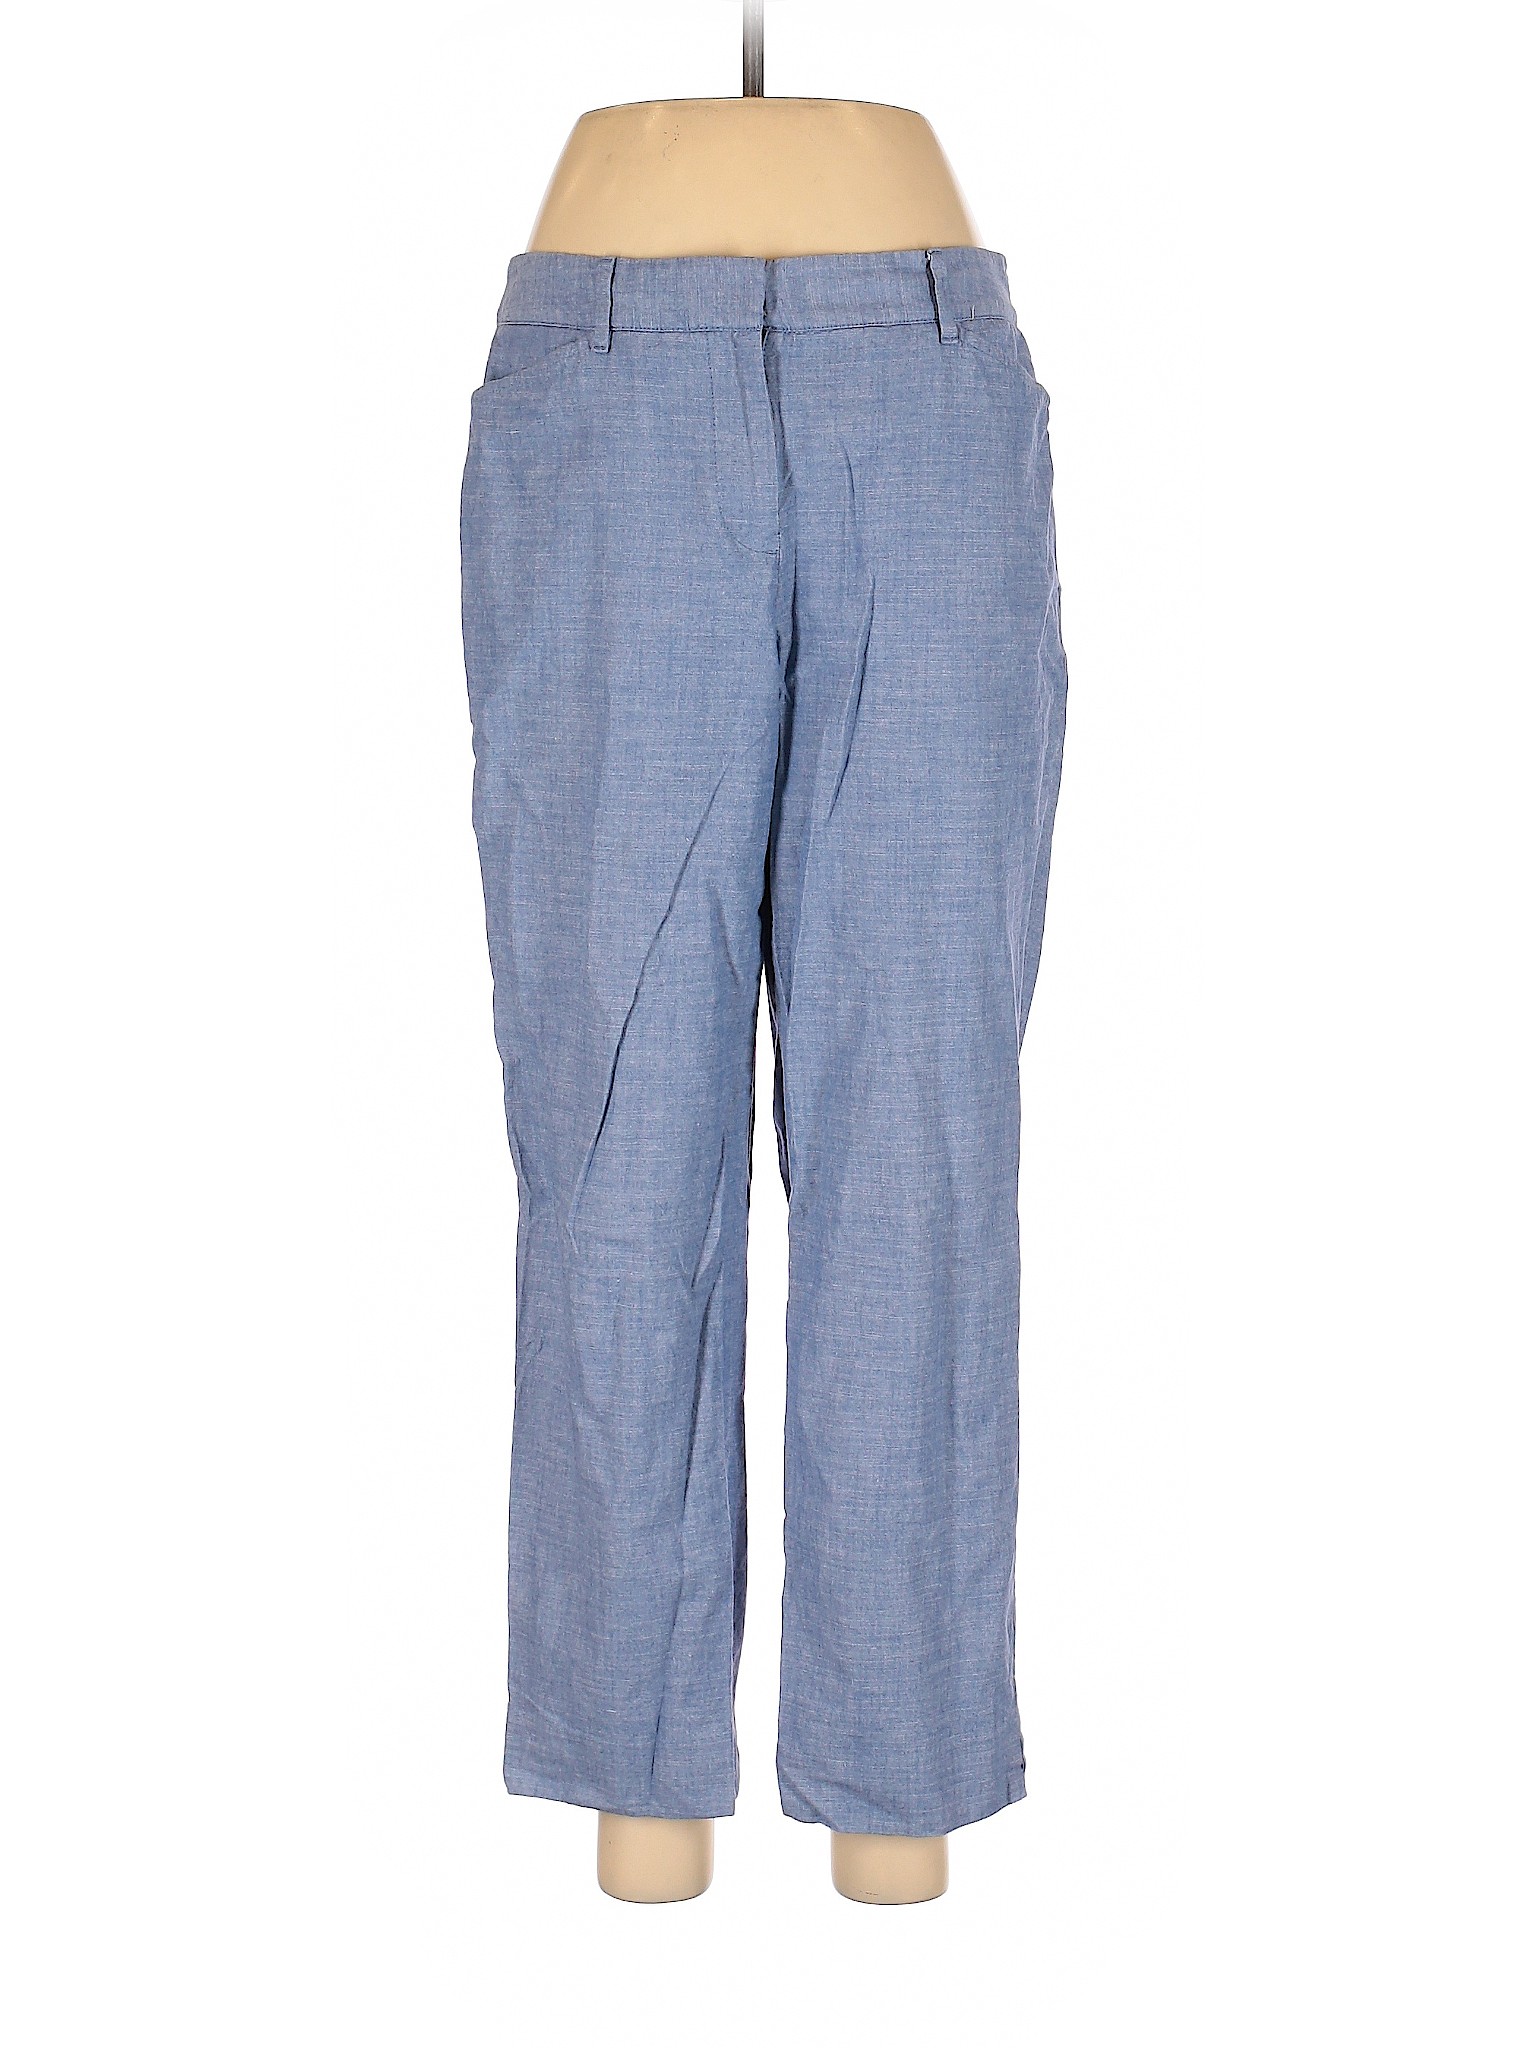 Talbots Women Blue Dress Pants 6 | eBay